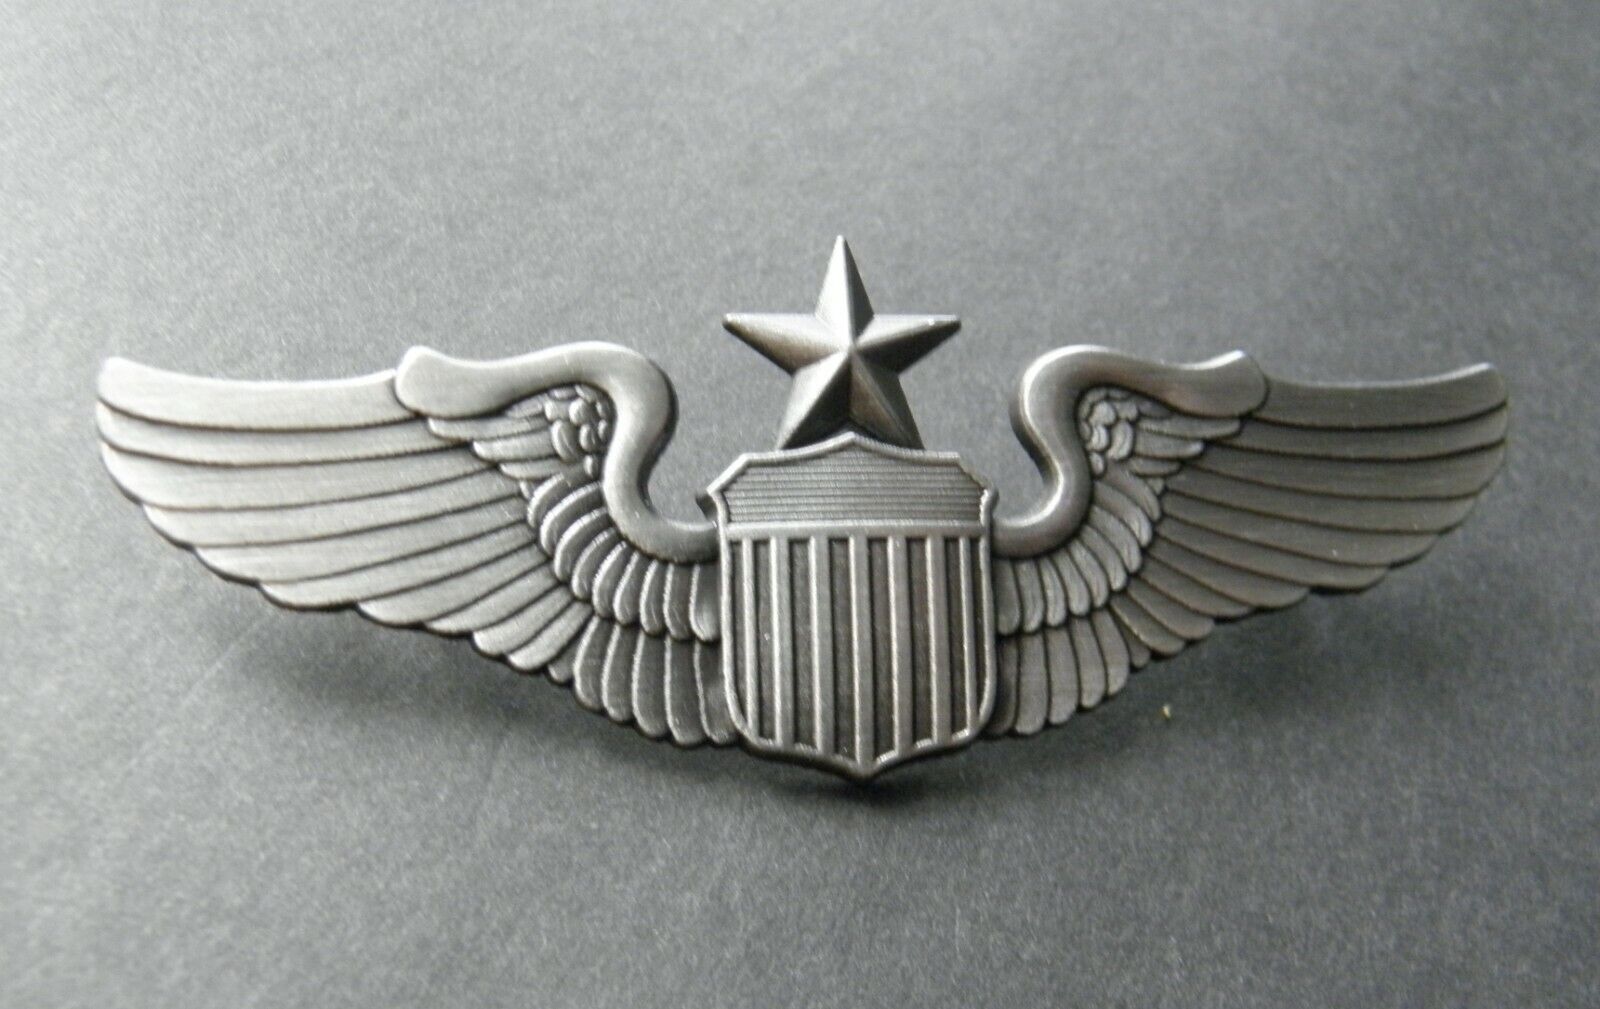 USAF AIR FORCE LARGE SENIOR PILOT WINGS LAPEL PIN BADGE 3 INCHES